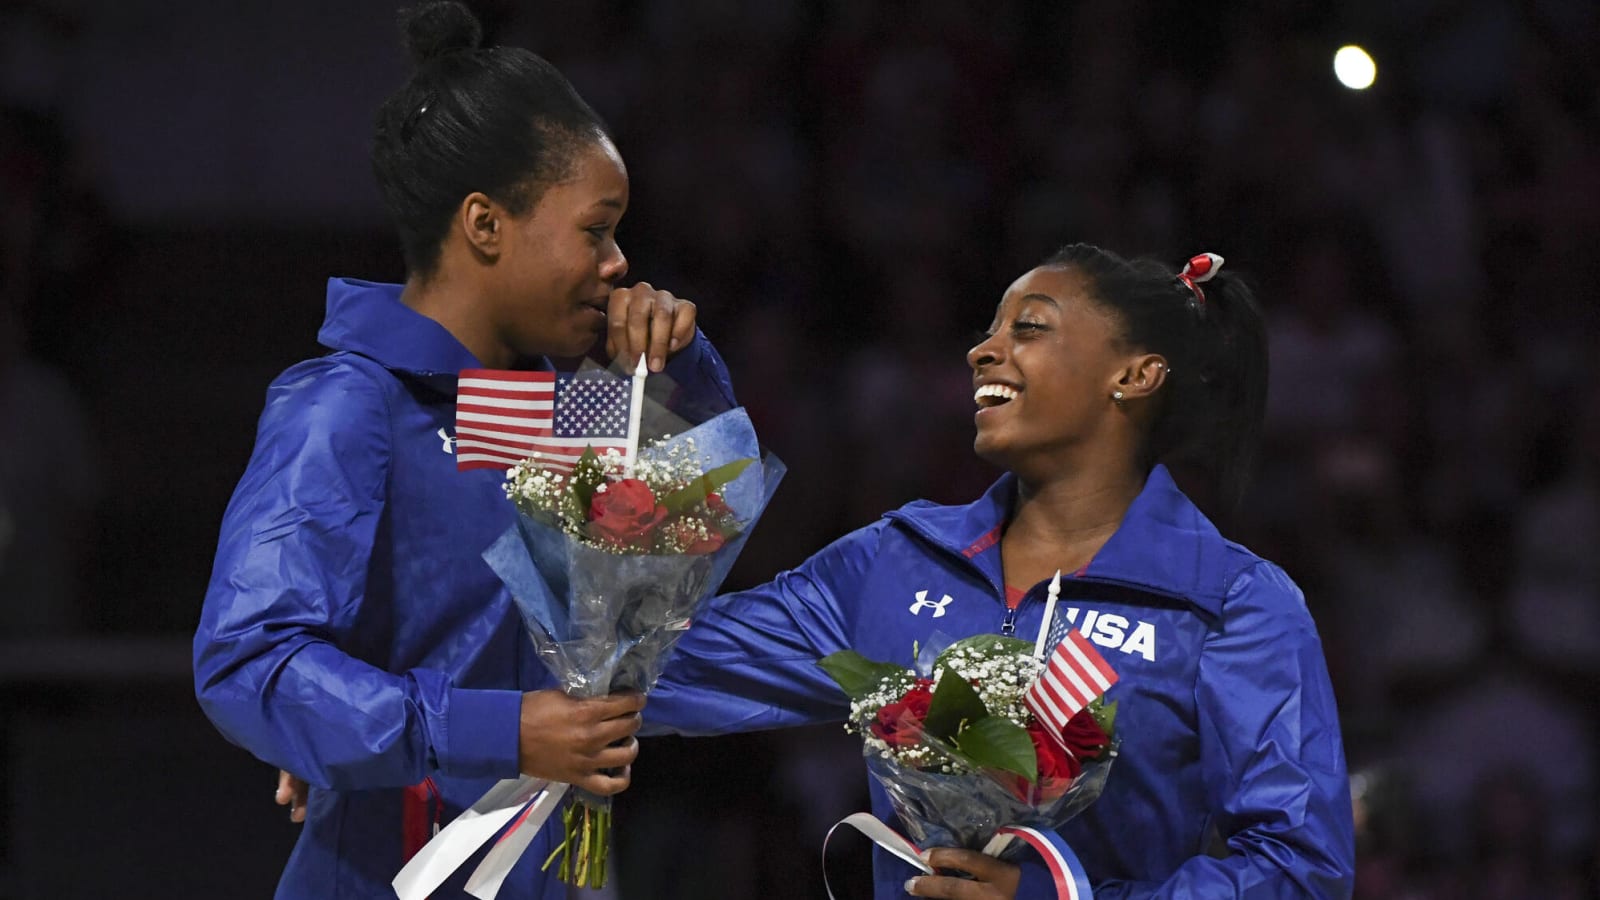 How season is shaping up for U.S. Olympic hopefuls Simone Biles, Gabby Douglas